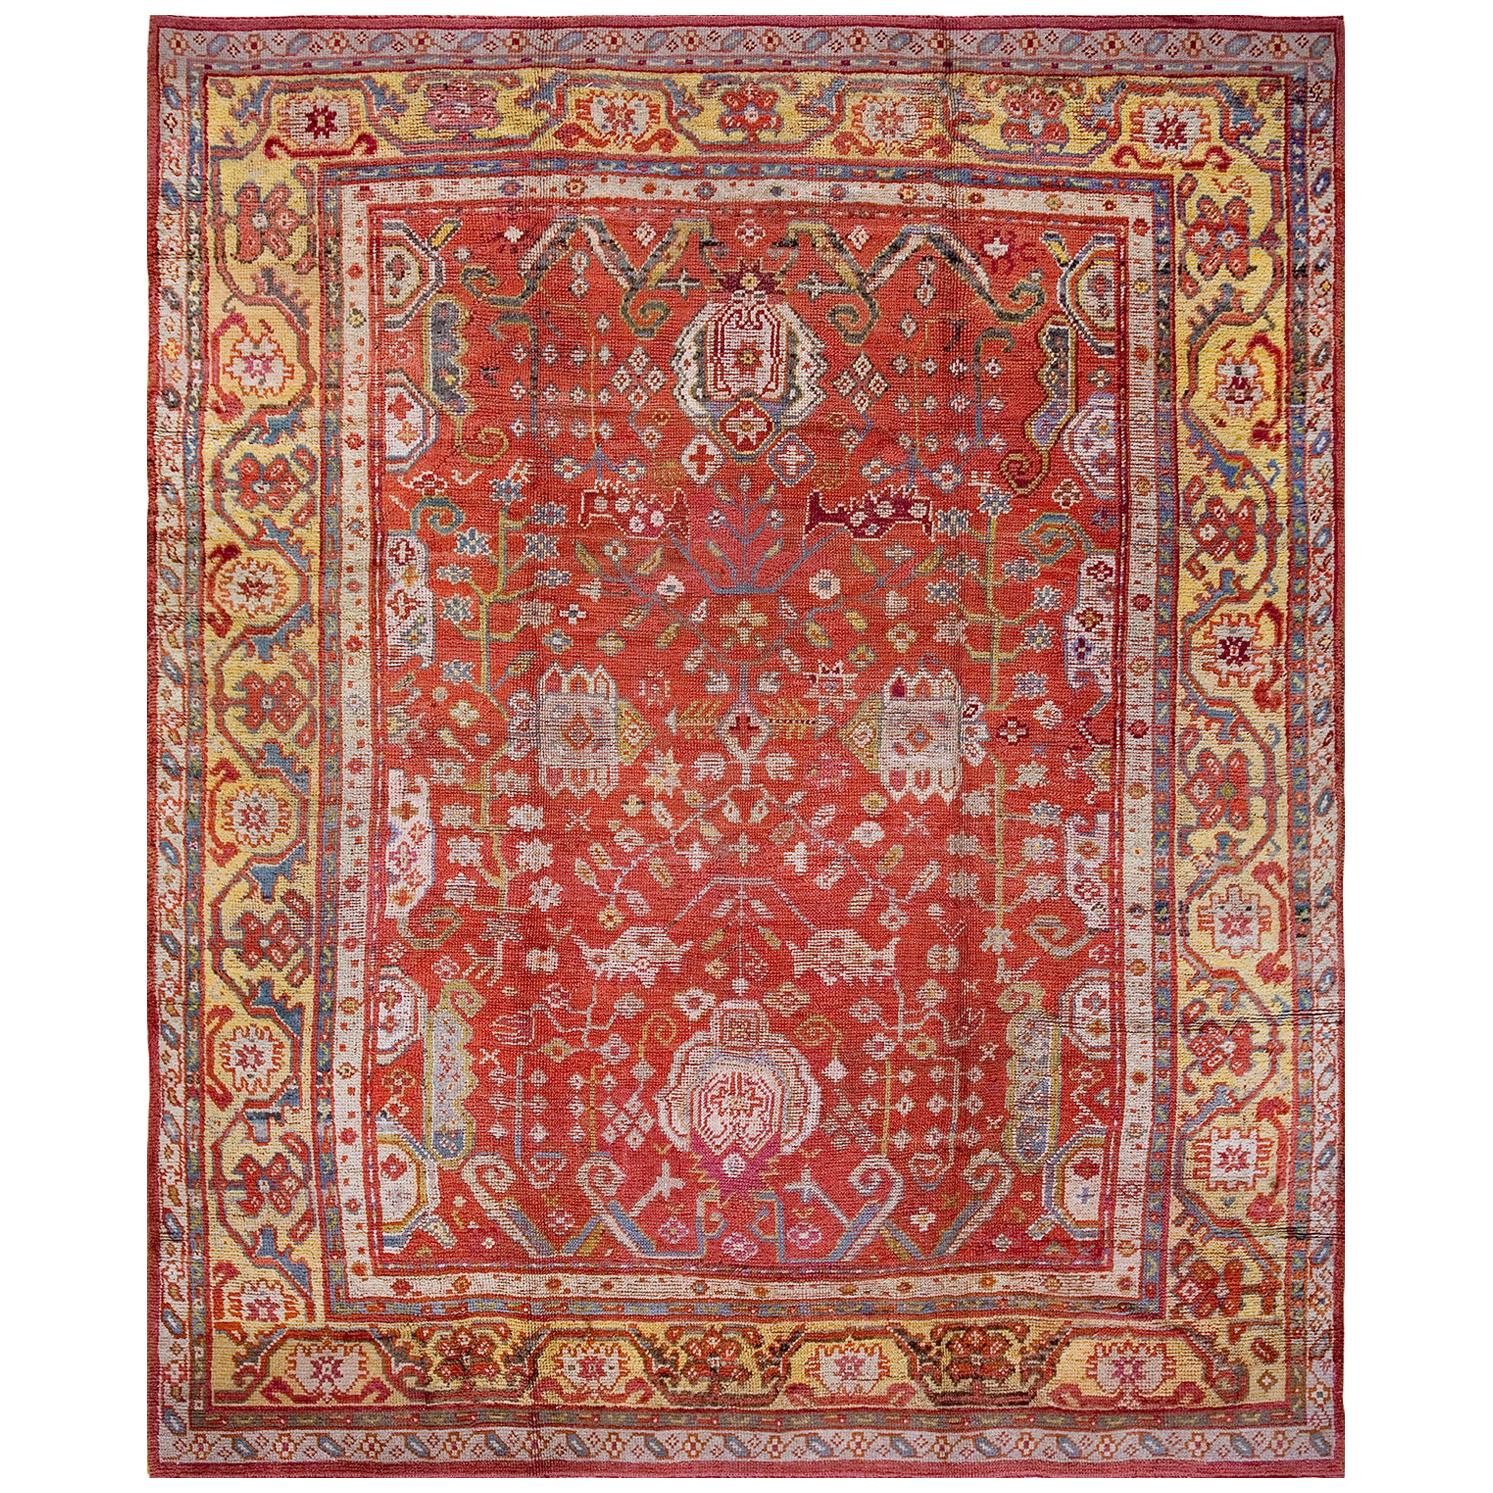 19th Century Turkish Oushak Carpet ( 9' x 11' - 275 x 335 ) 